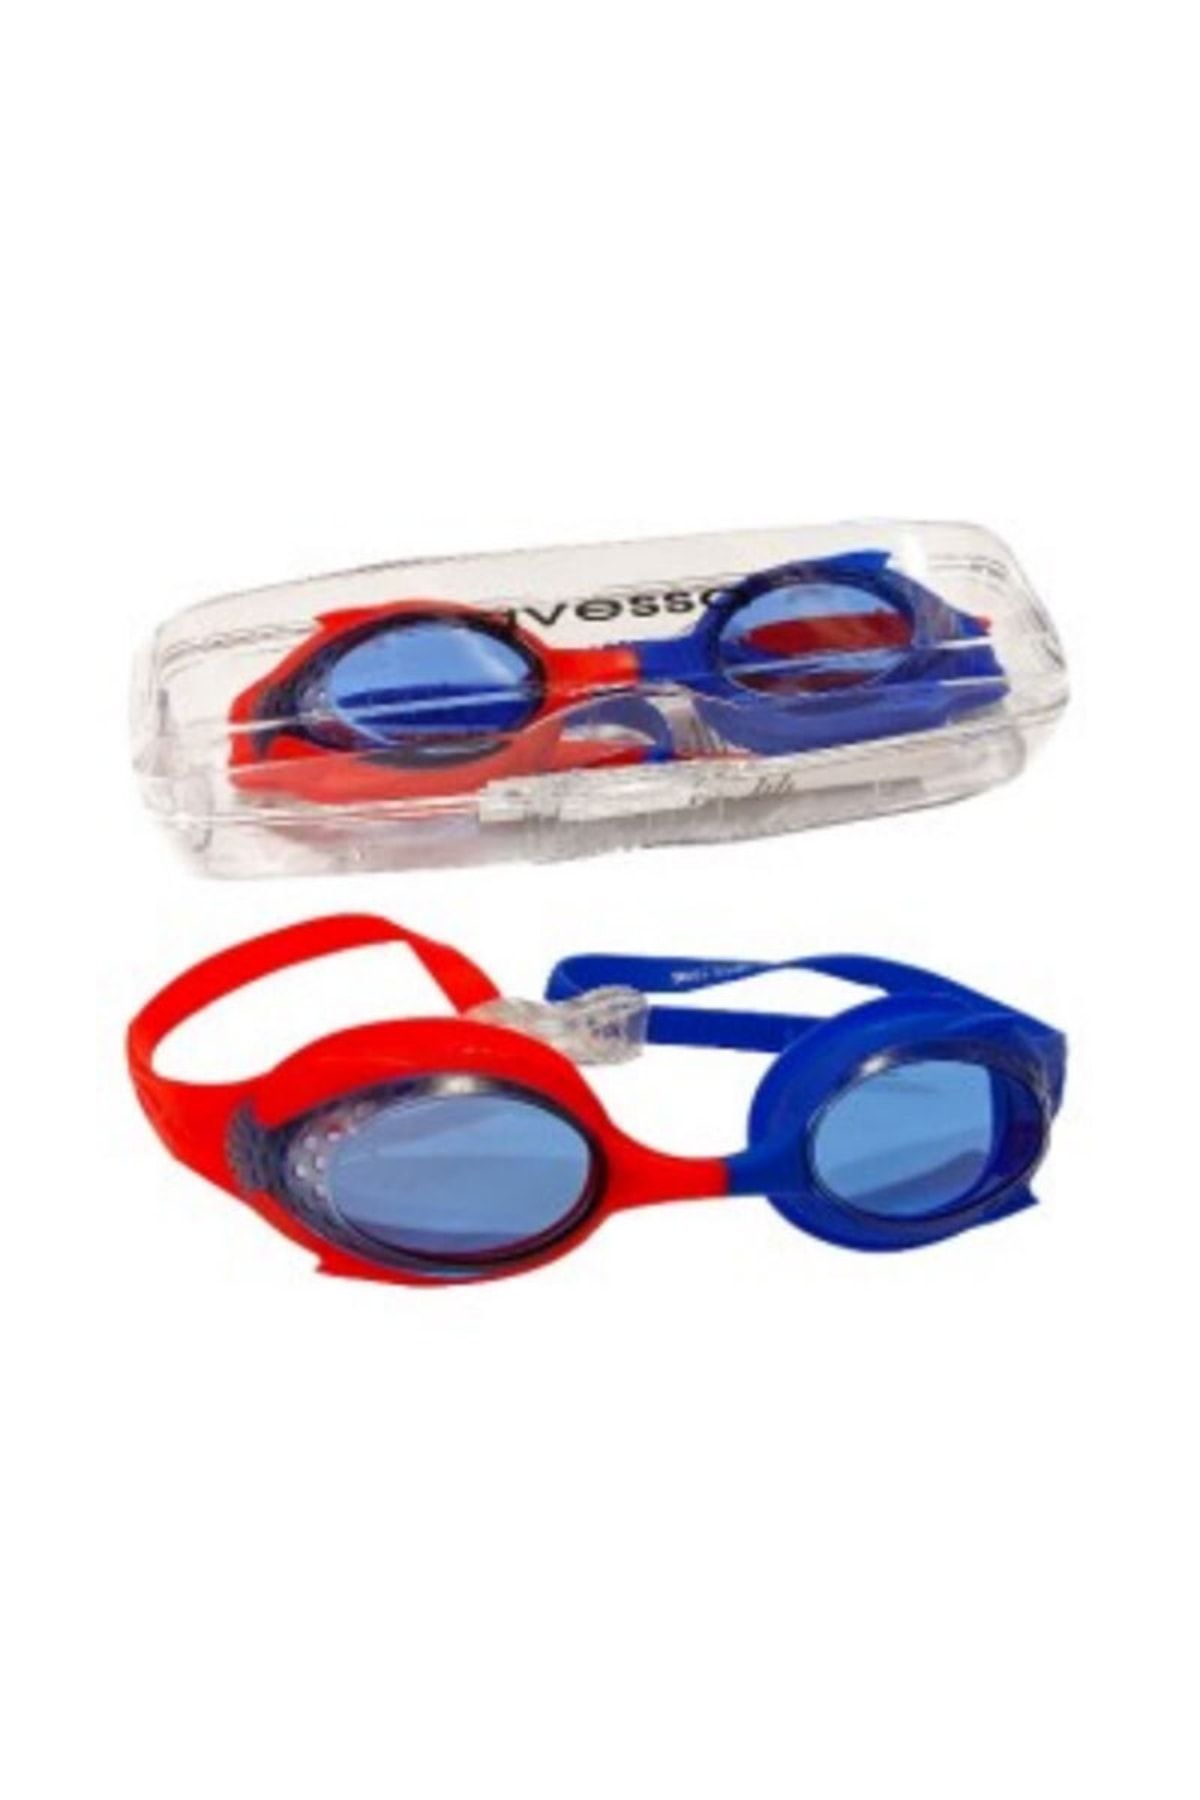 Avessa Çocuk Yüzücü Gözlüğü Mavi - Kırmızı Gs28-5